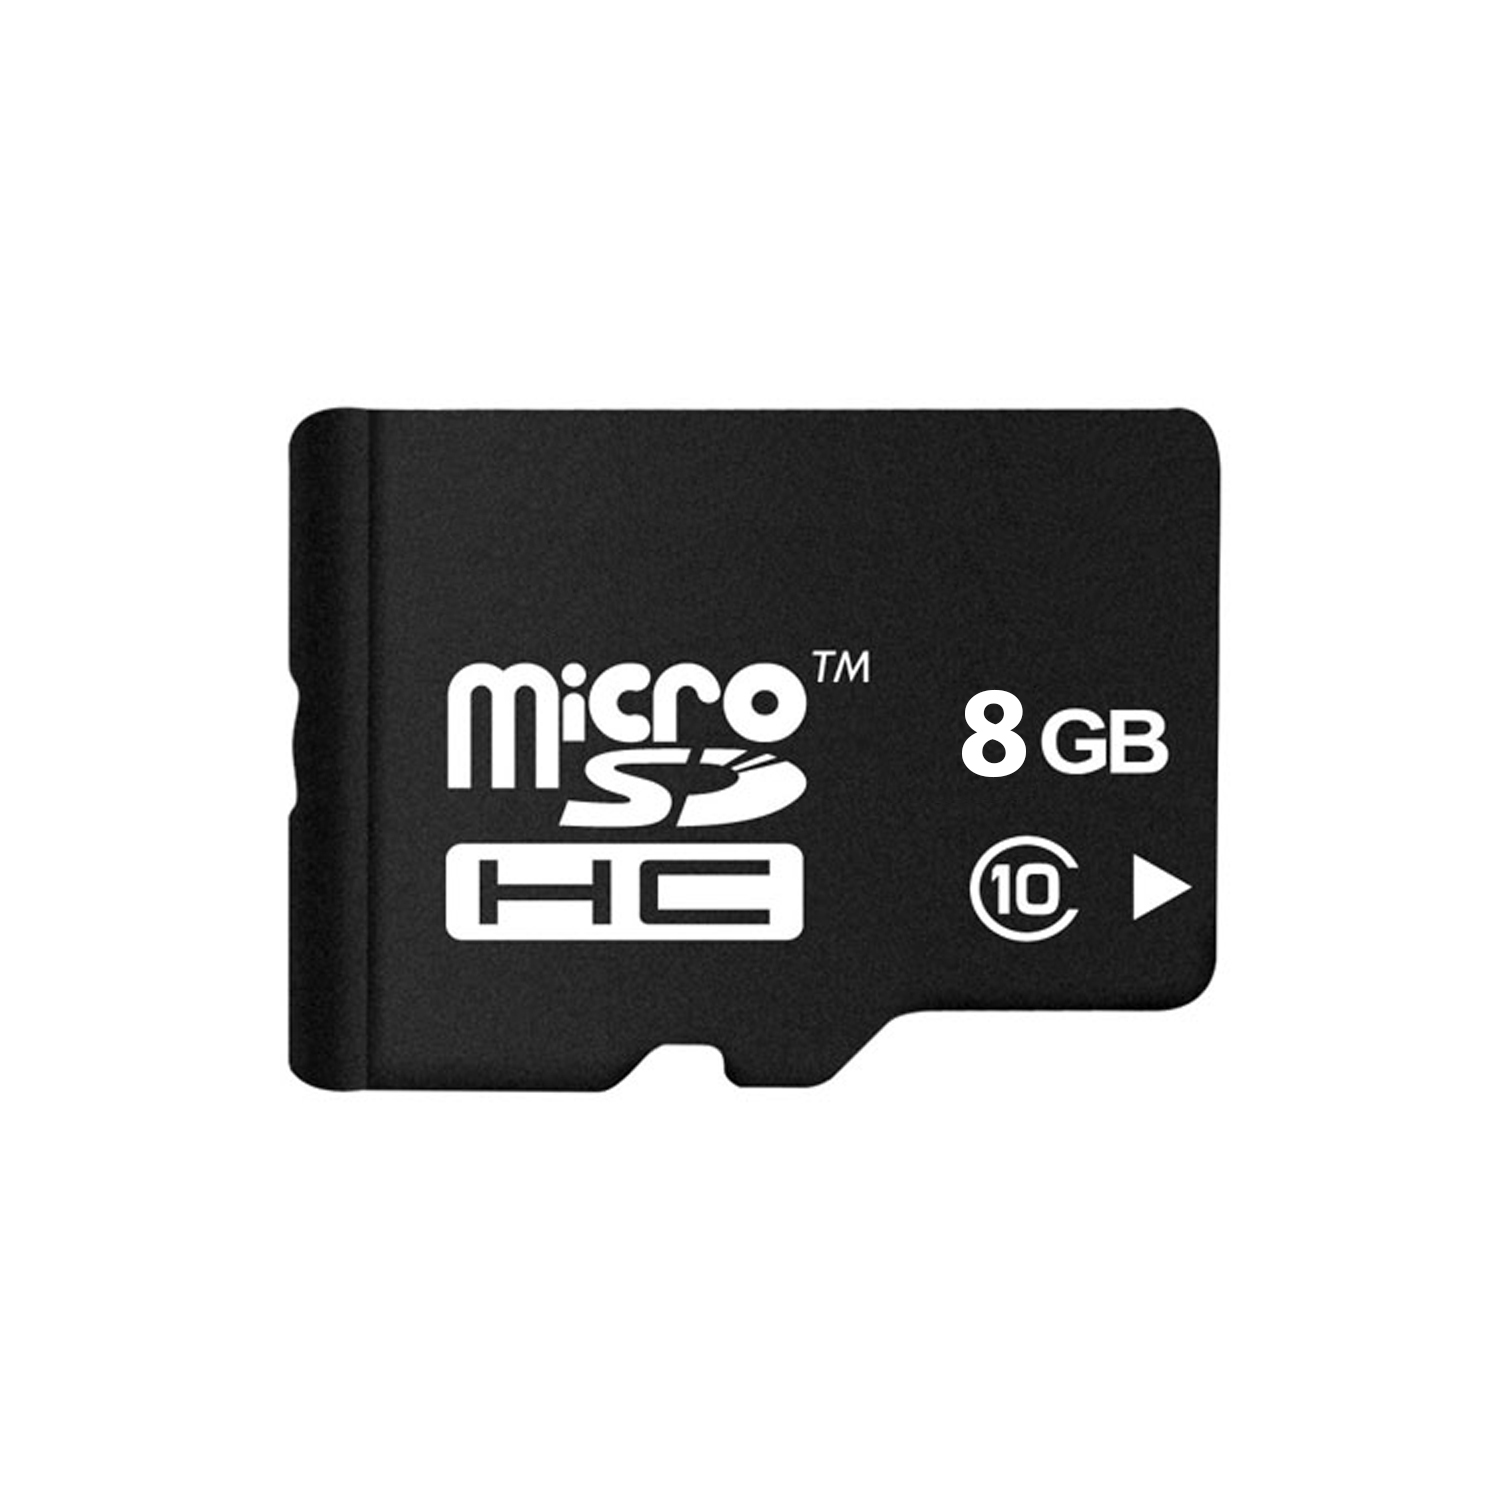 Микро СД 8 ГБ. SD карта 8 ГБ. SD карта Netac. Микро СД 8 ГБ купить в СПБ.